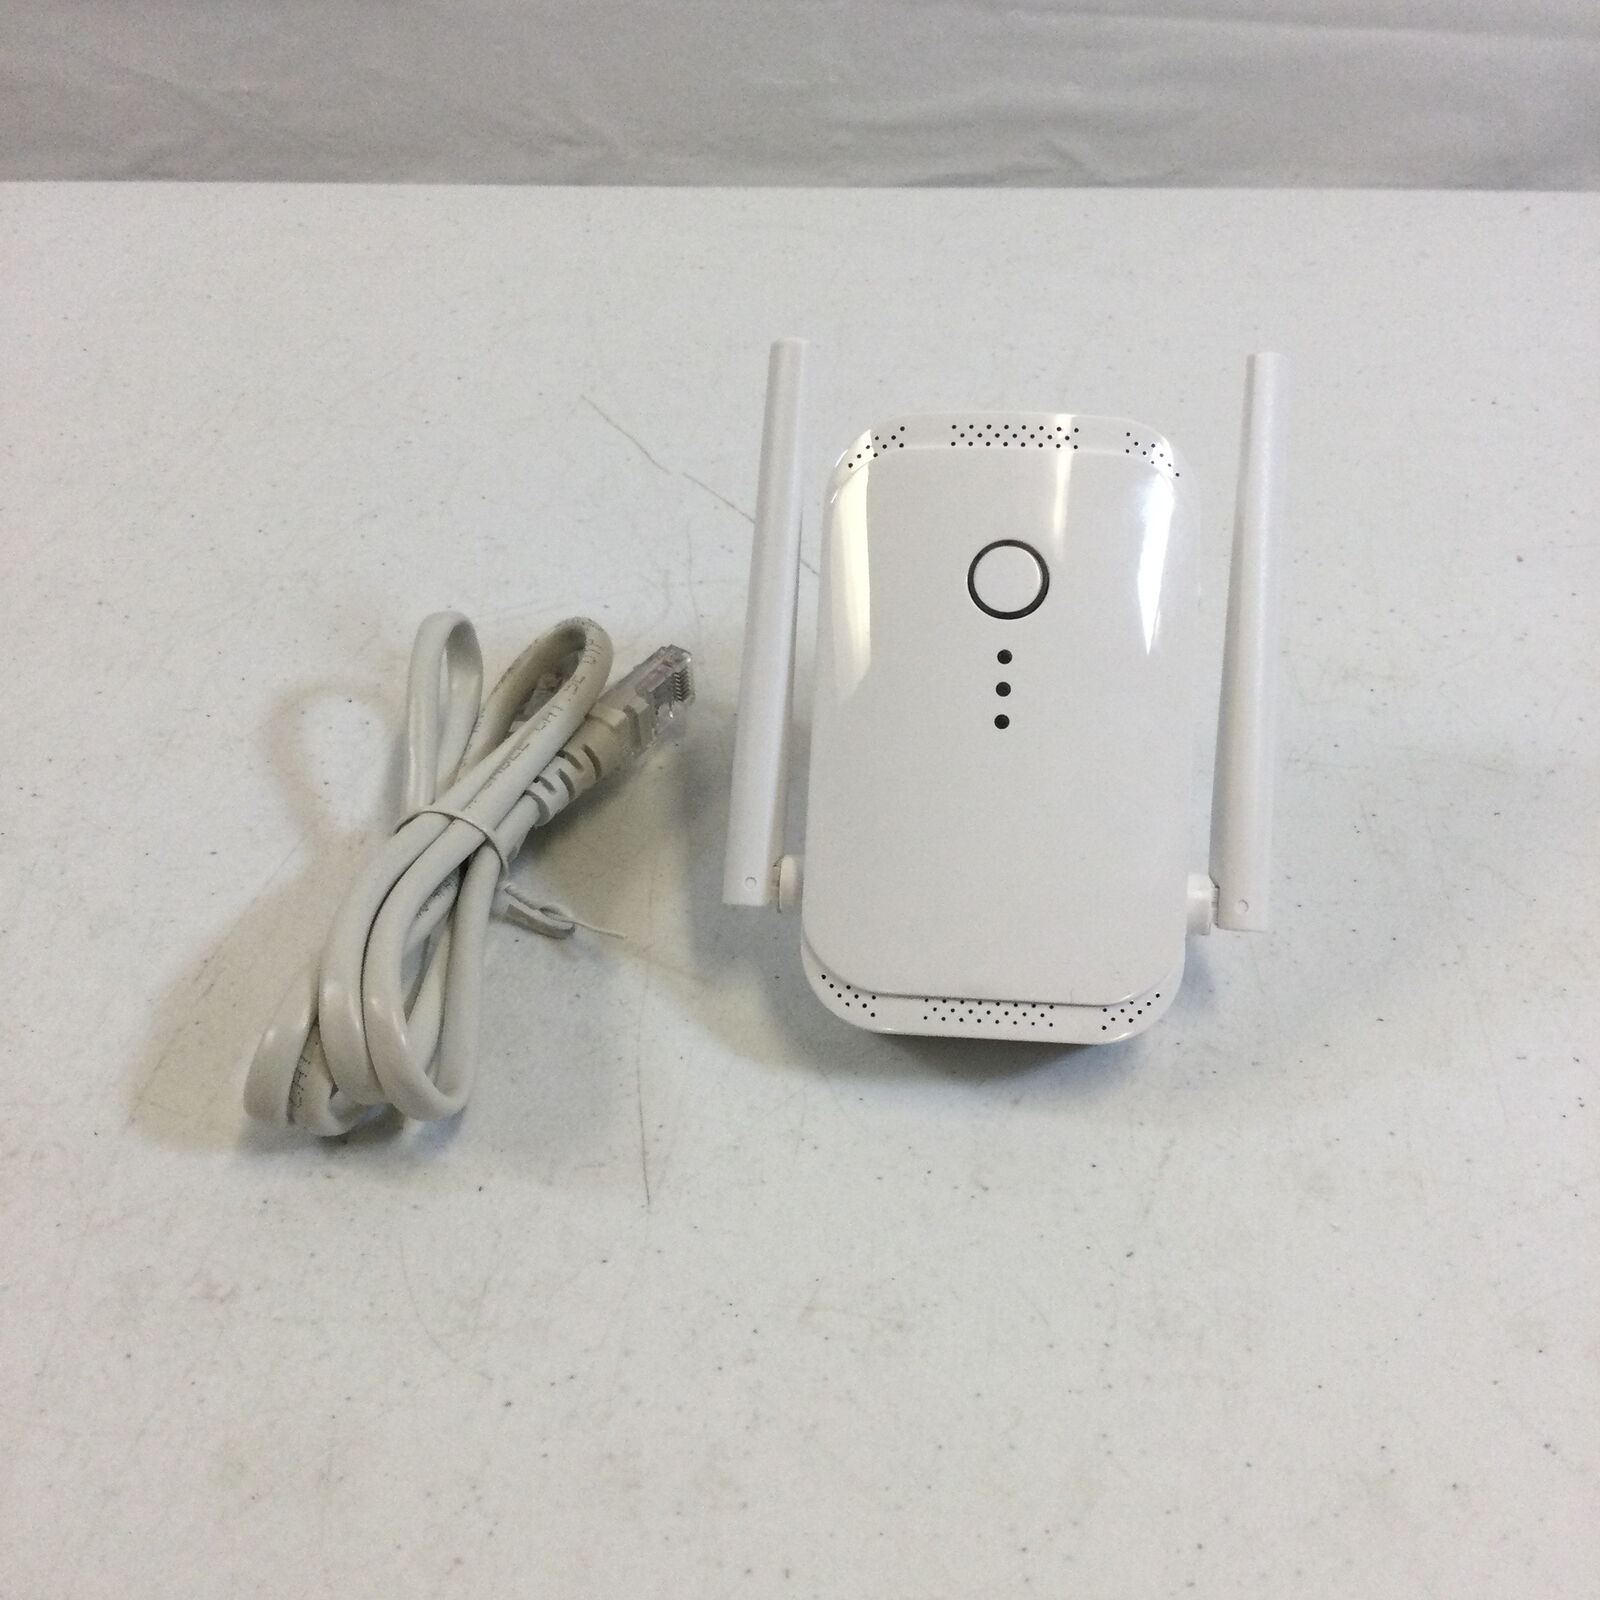 Macard N300 White Wireless High Speed Fast WiFi Signal Range Booster Extender